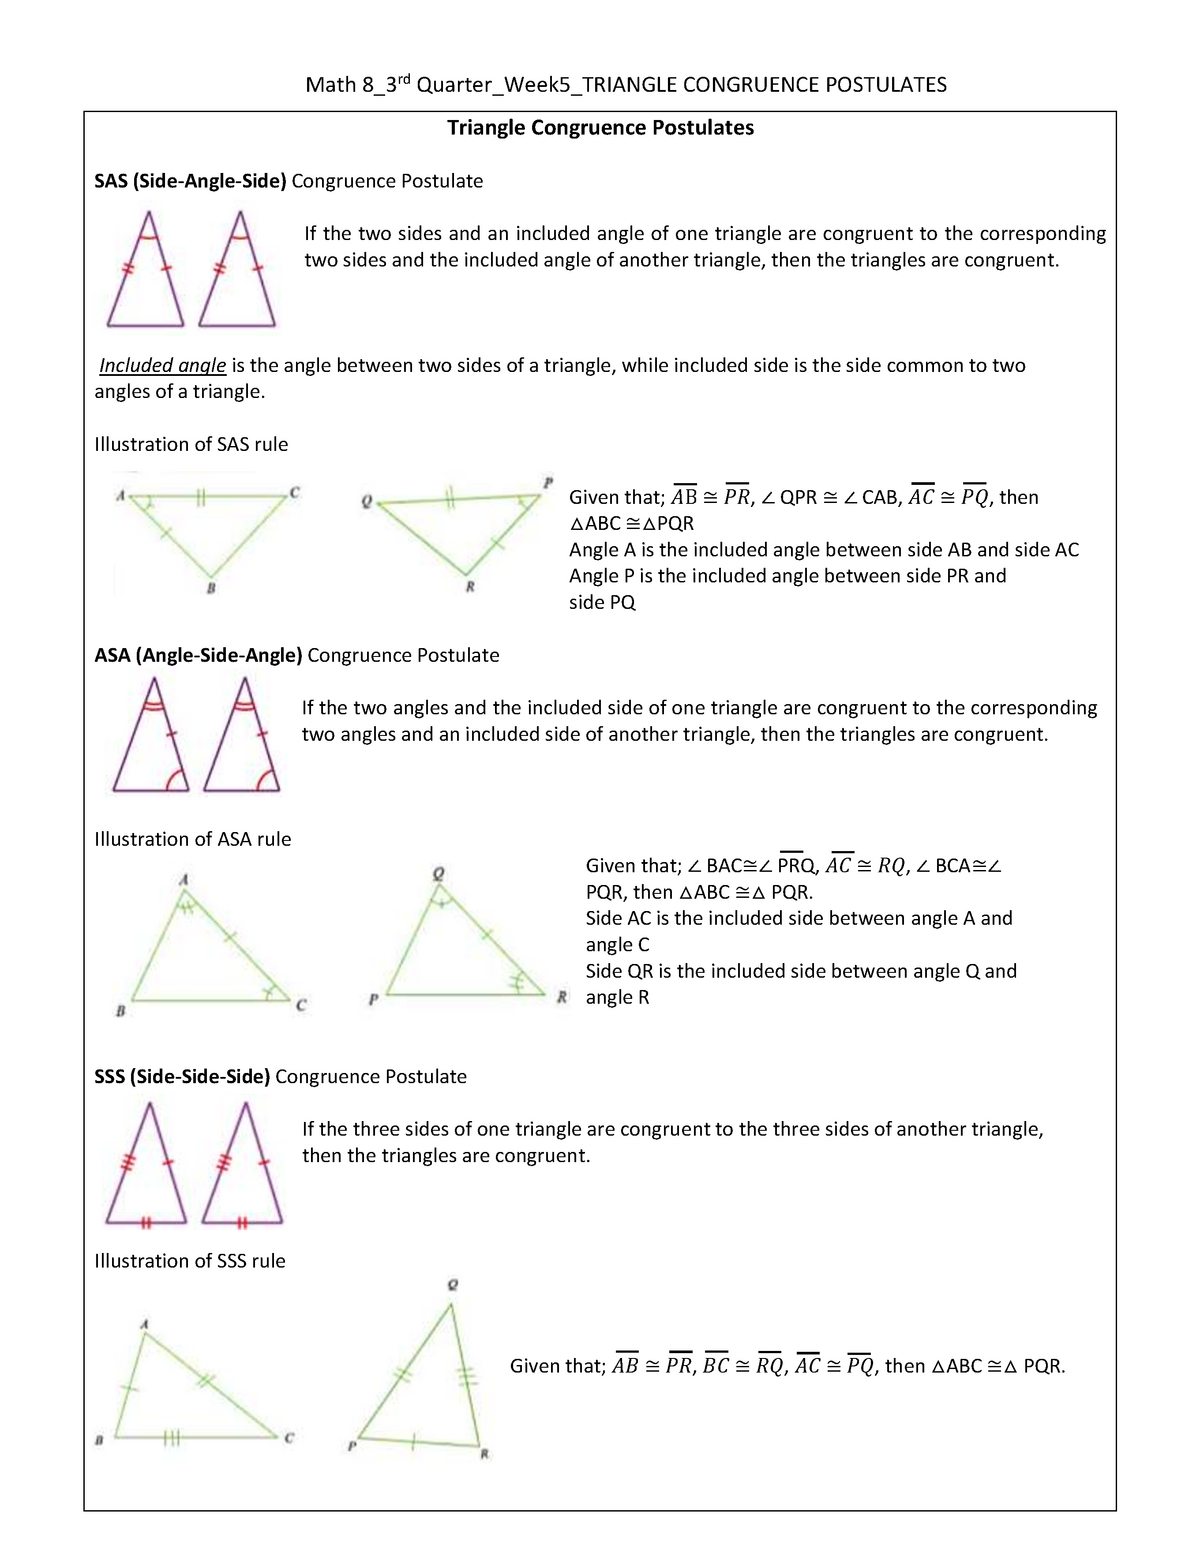 Triangle Congruence Postulates Mathematics For General Education Studocu